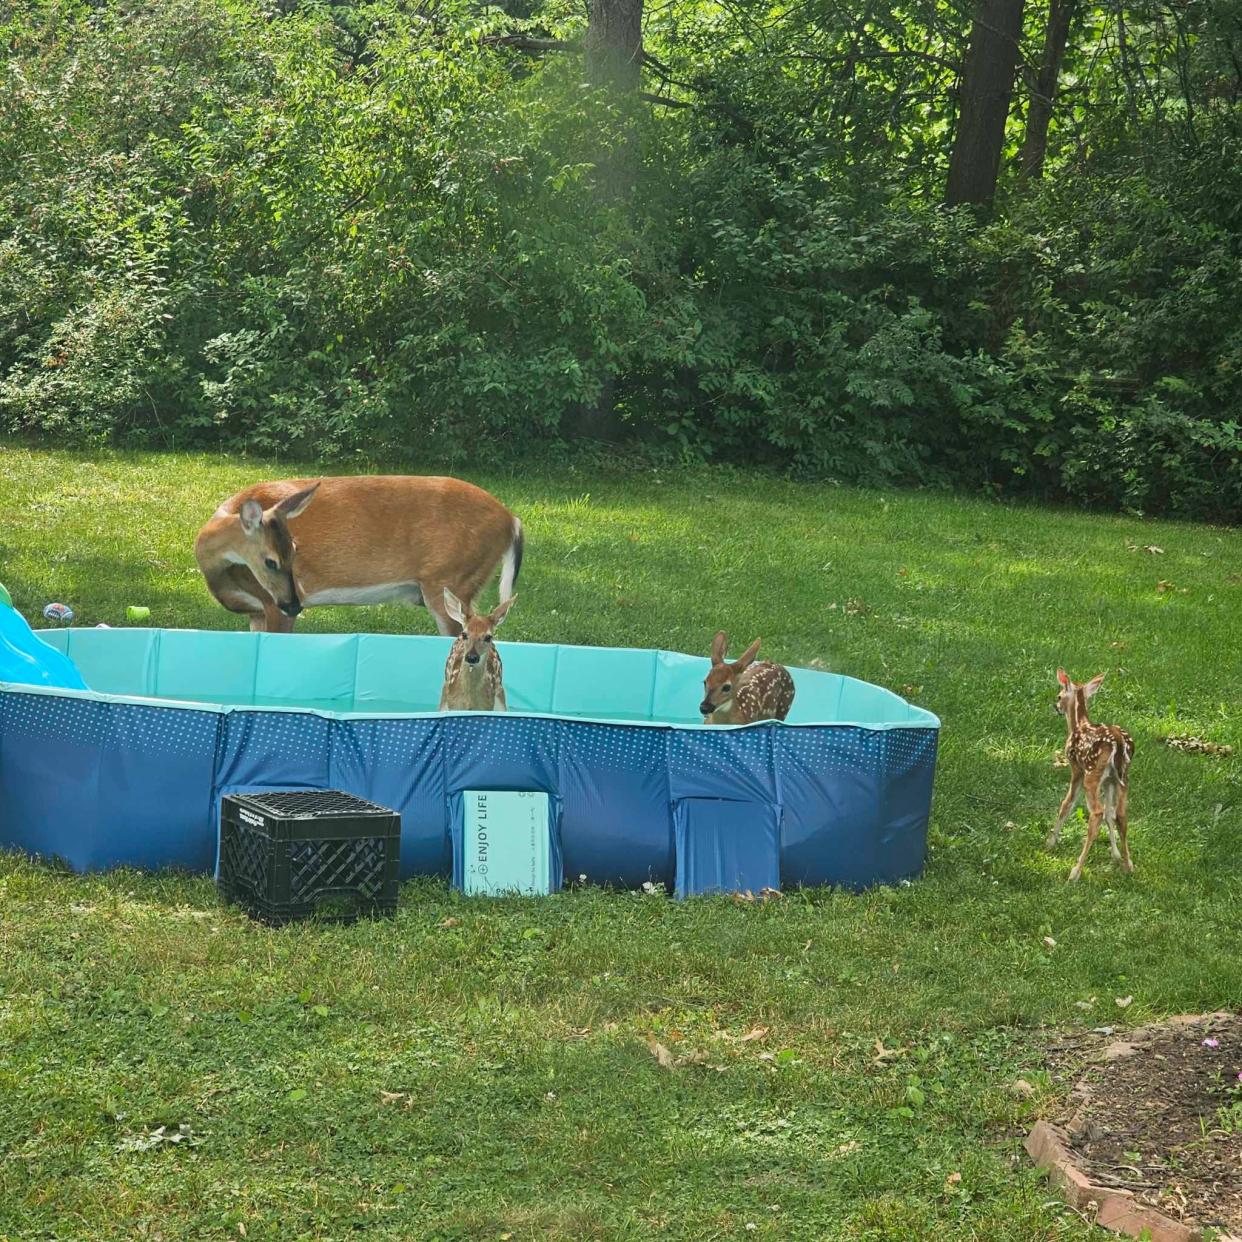 Baby deer splash around in a Stow resident's backyard pool June 20.